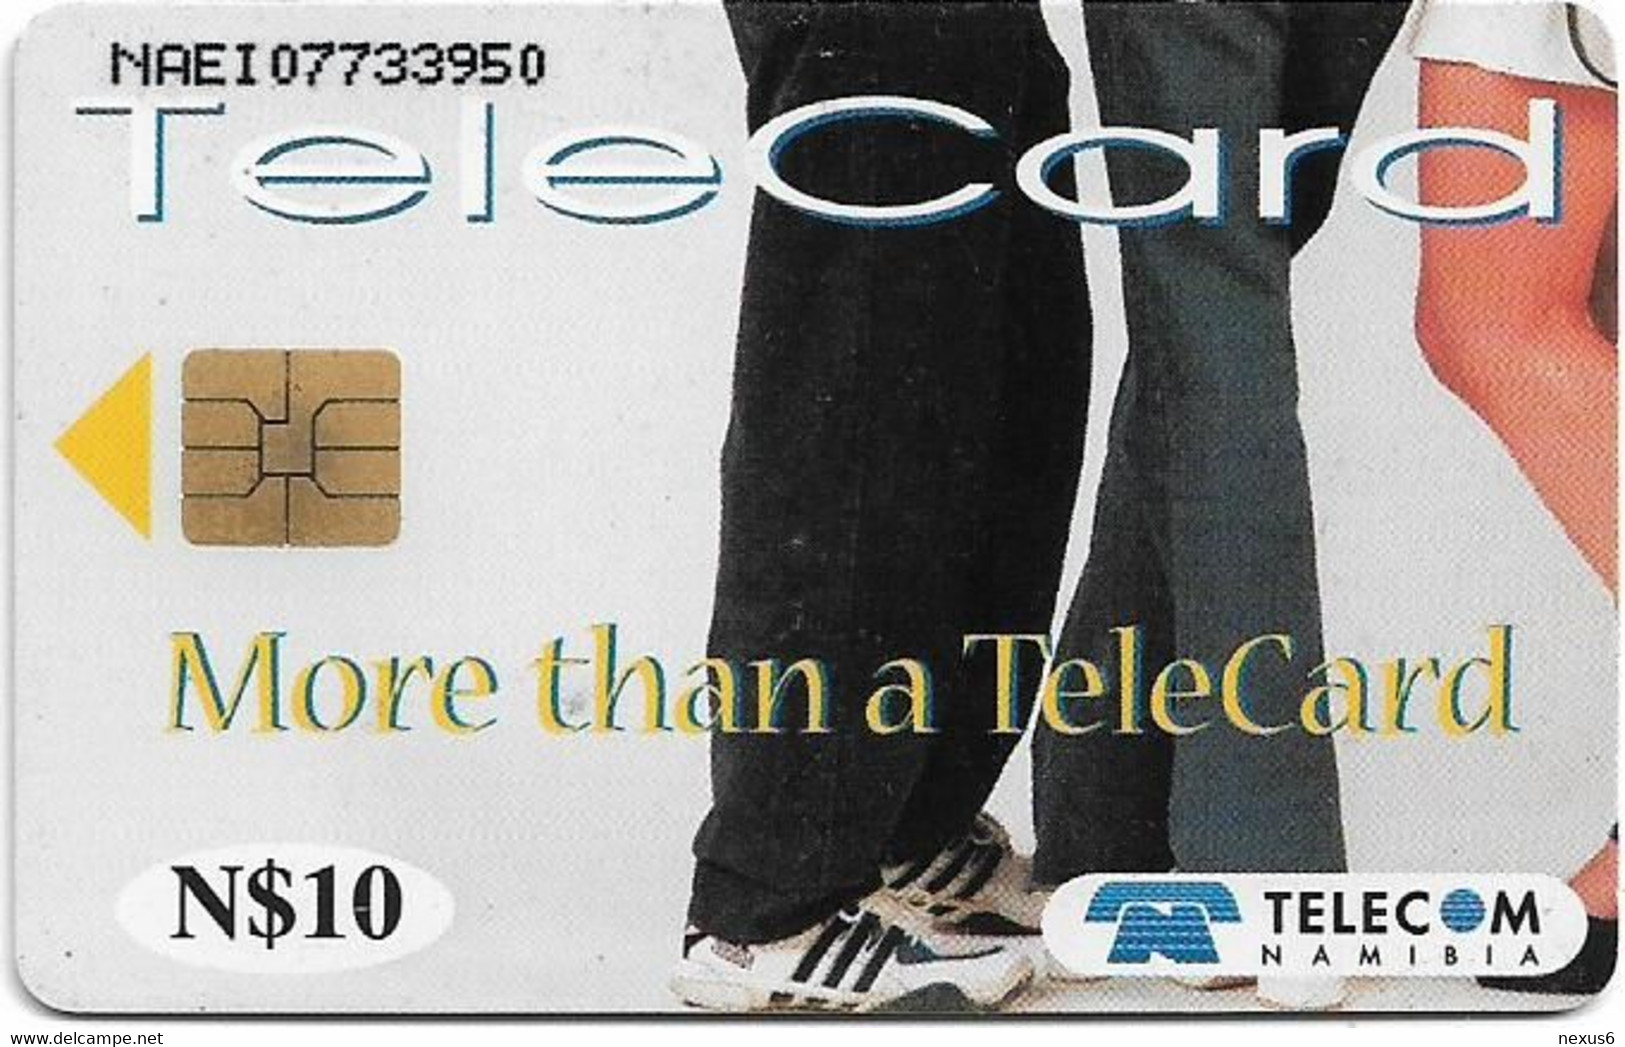 Namibia - Telecom Namibia - More Than A Telecard - It's A Student Card, 1999, 10$, Used - Namibia